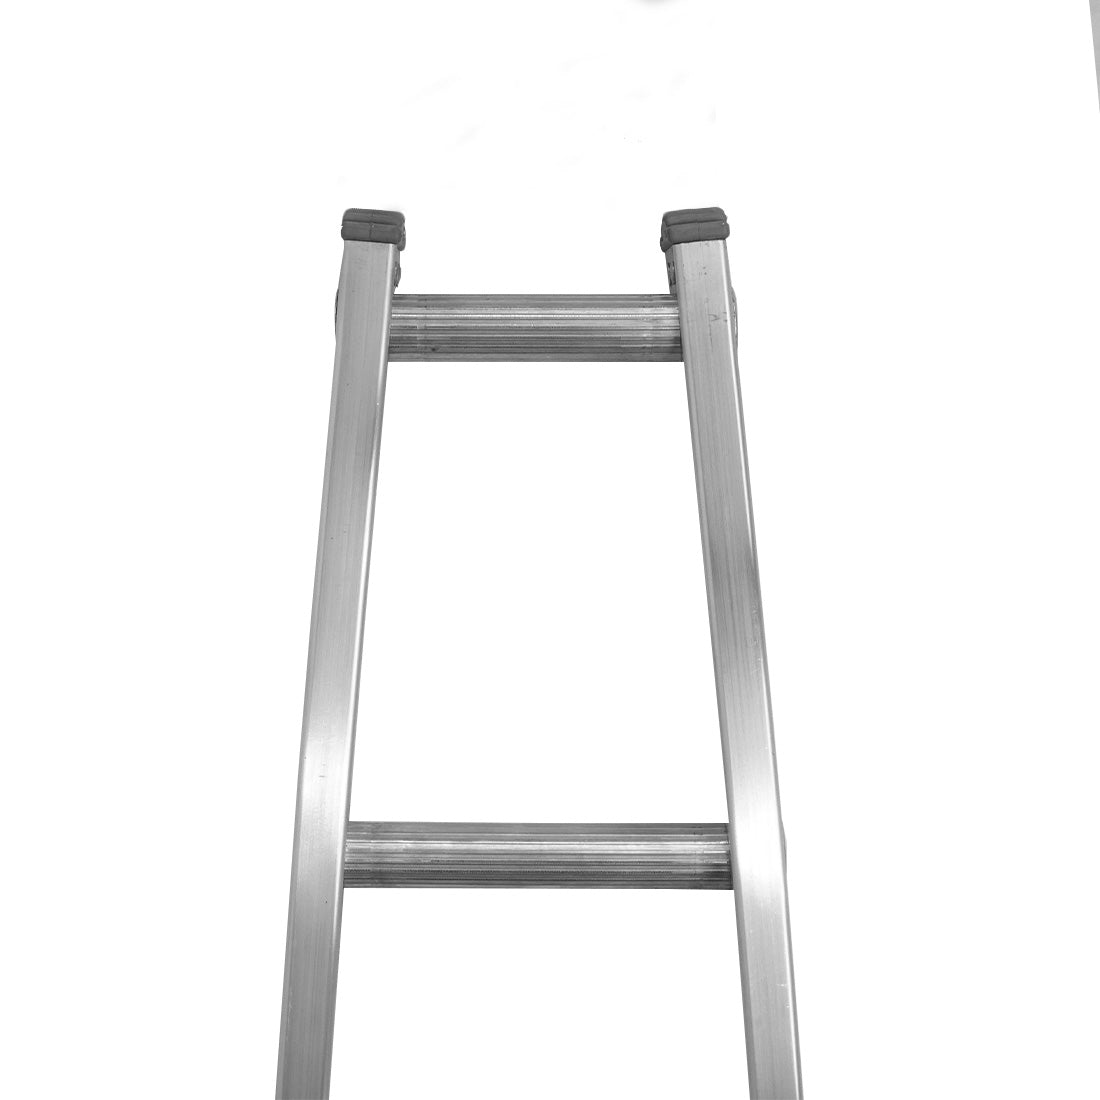 Metallic Ladder Aluminum Open Top Section - 7 Foot Top View